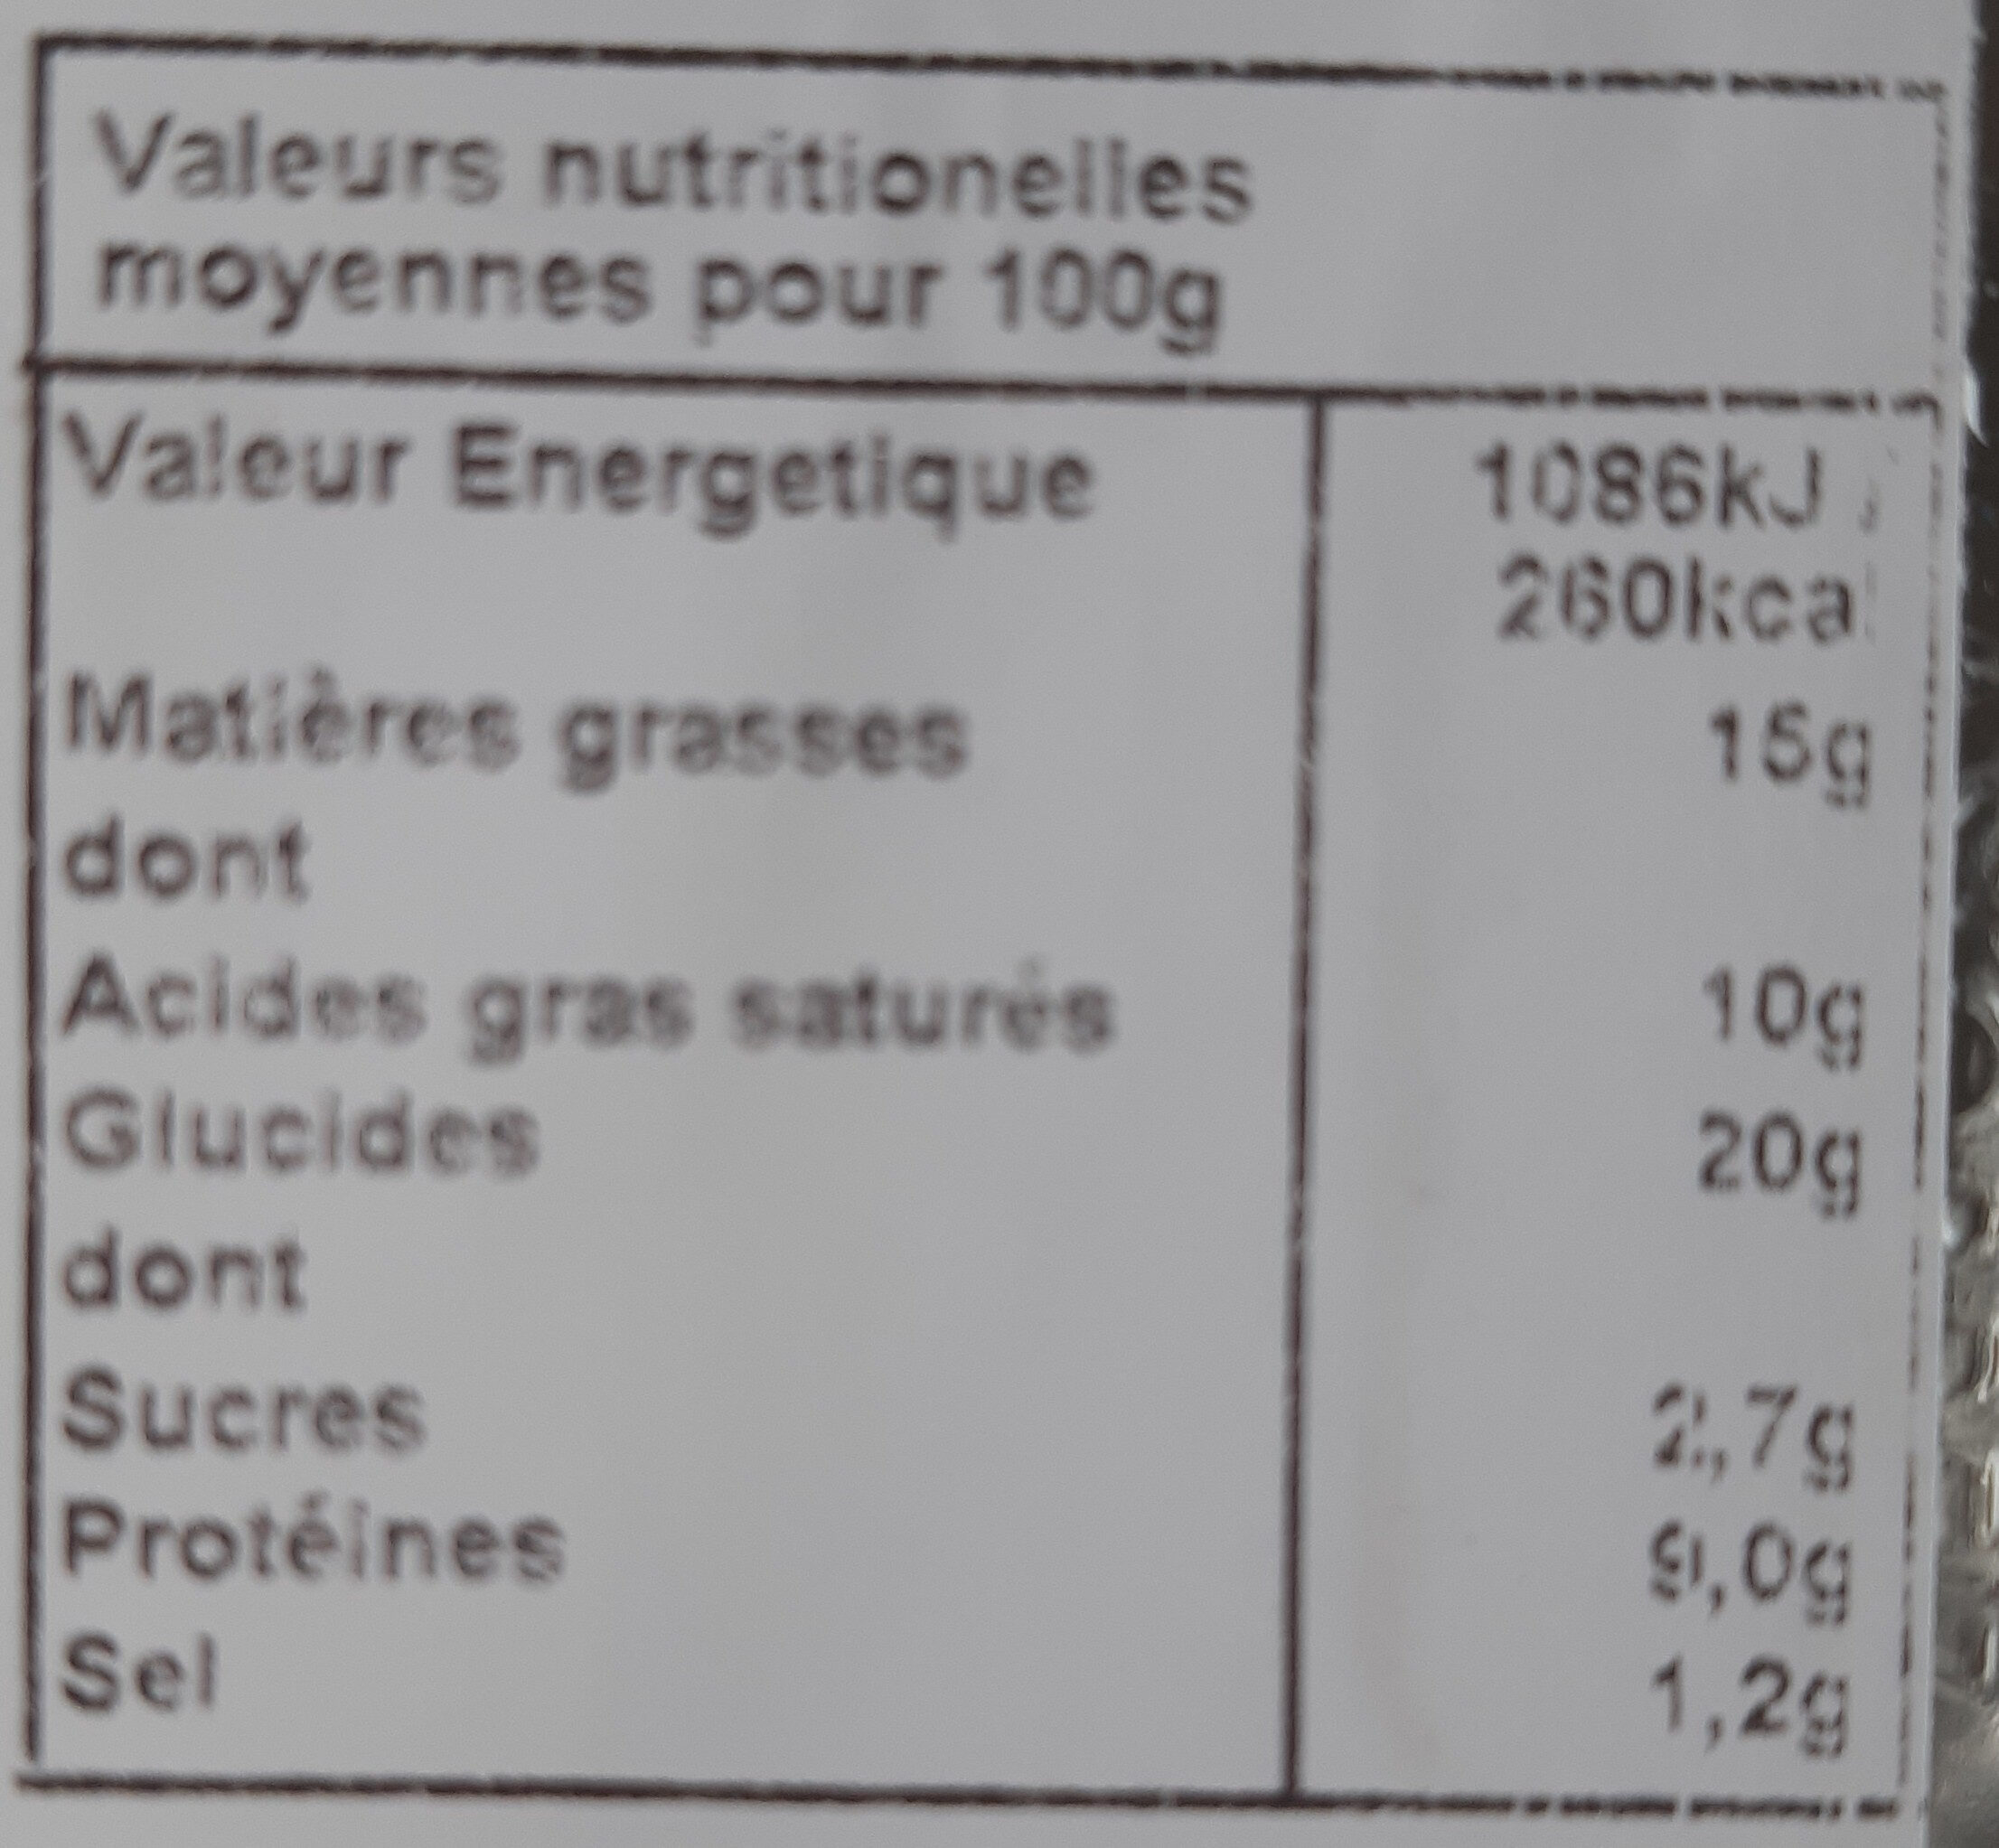 tartes - Tableau nutritionnel